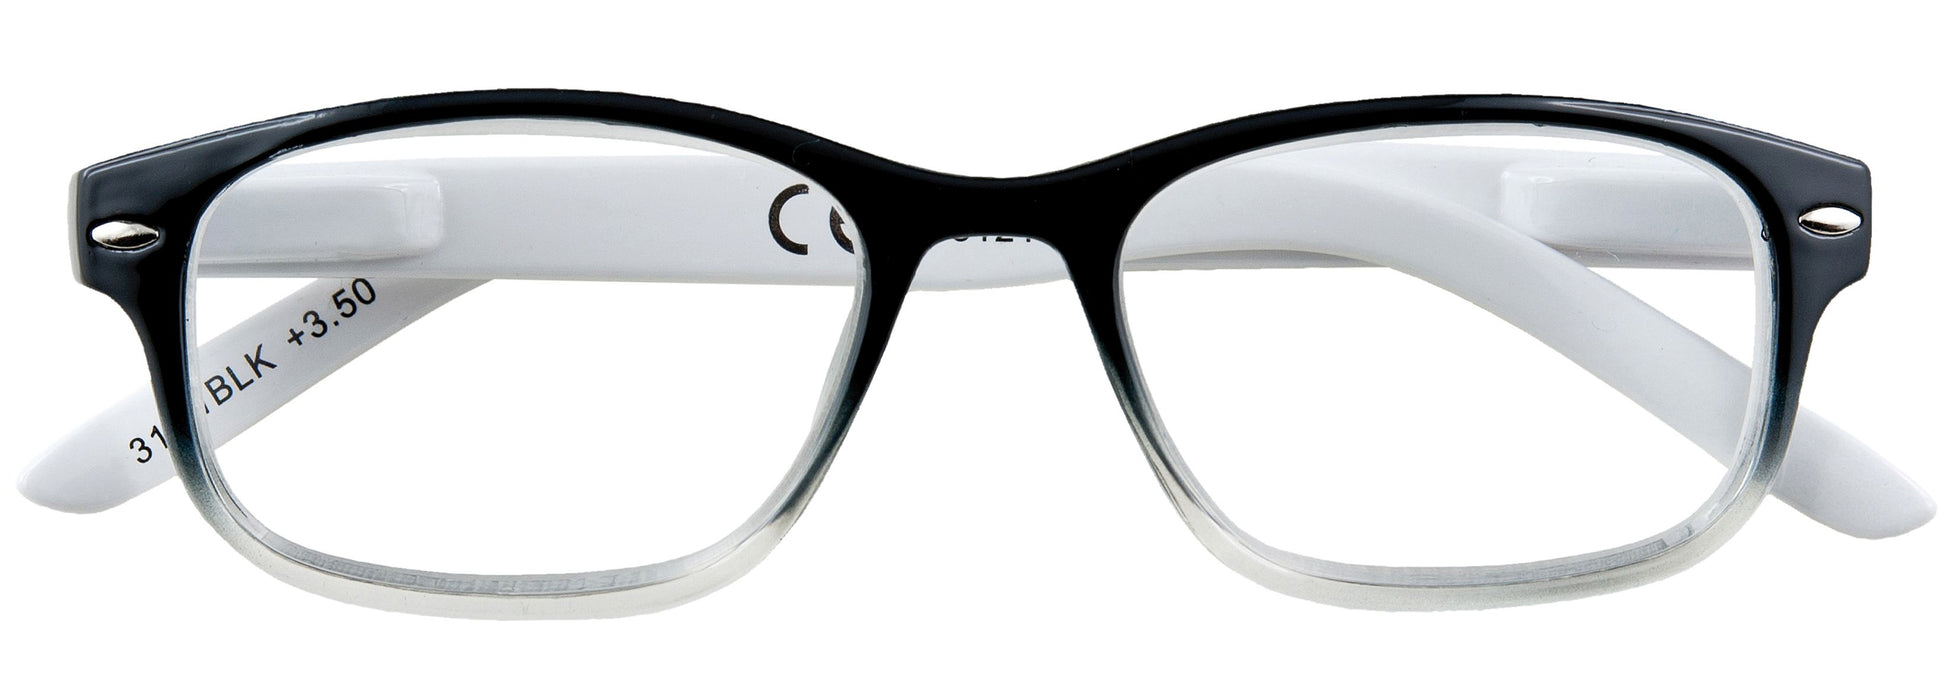 ZIPPO occhiali da lettura +3.50 31Z-B1-BLK350